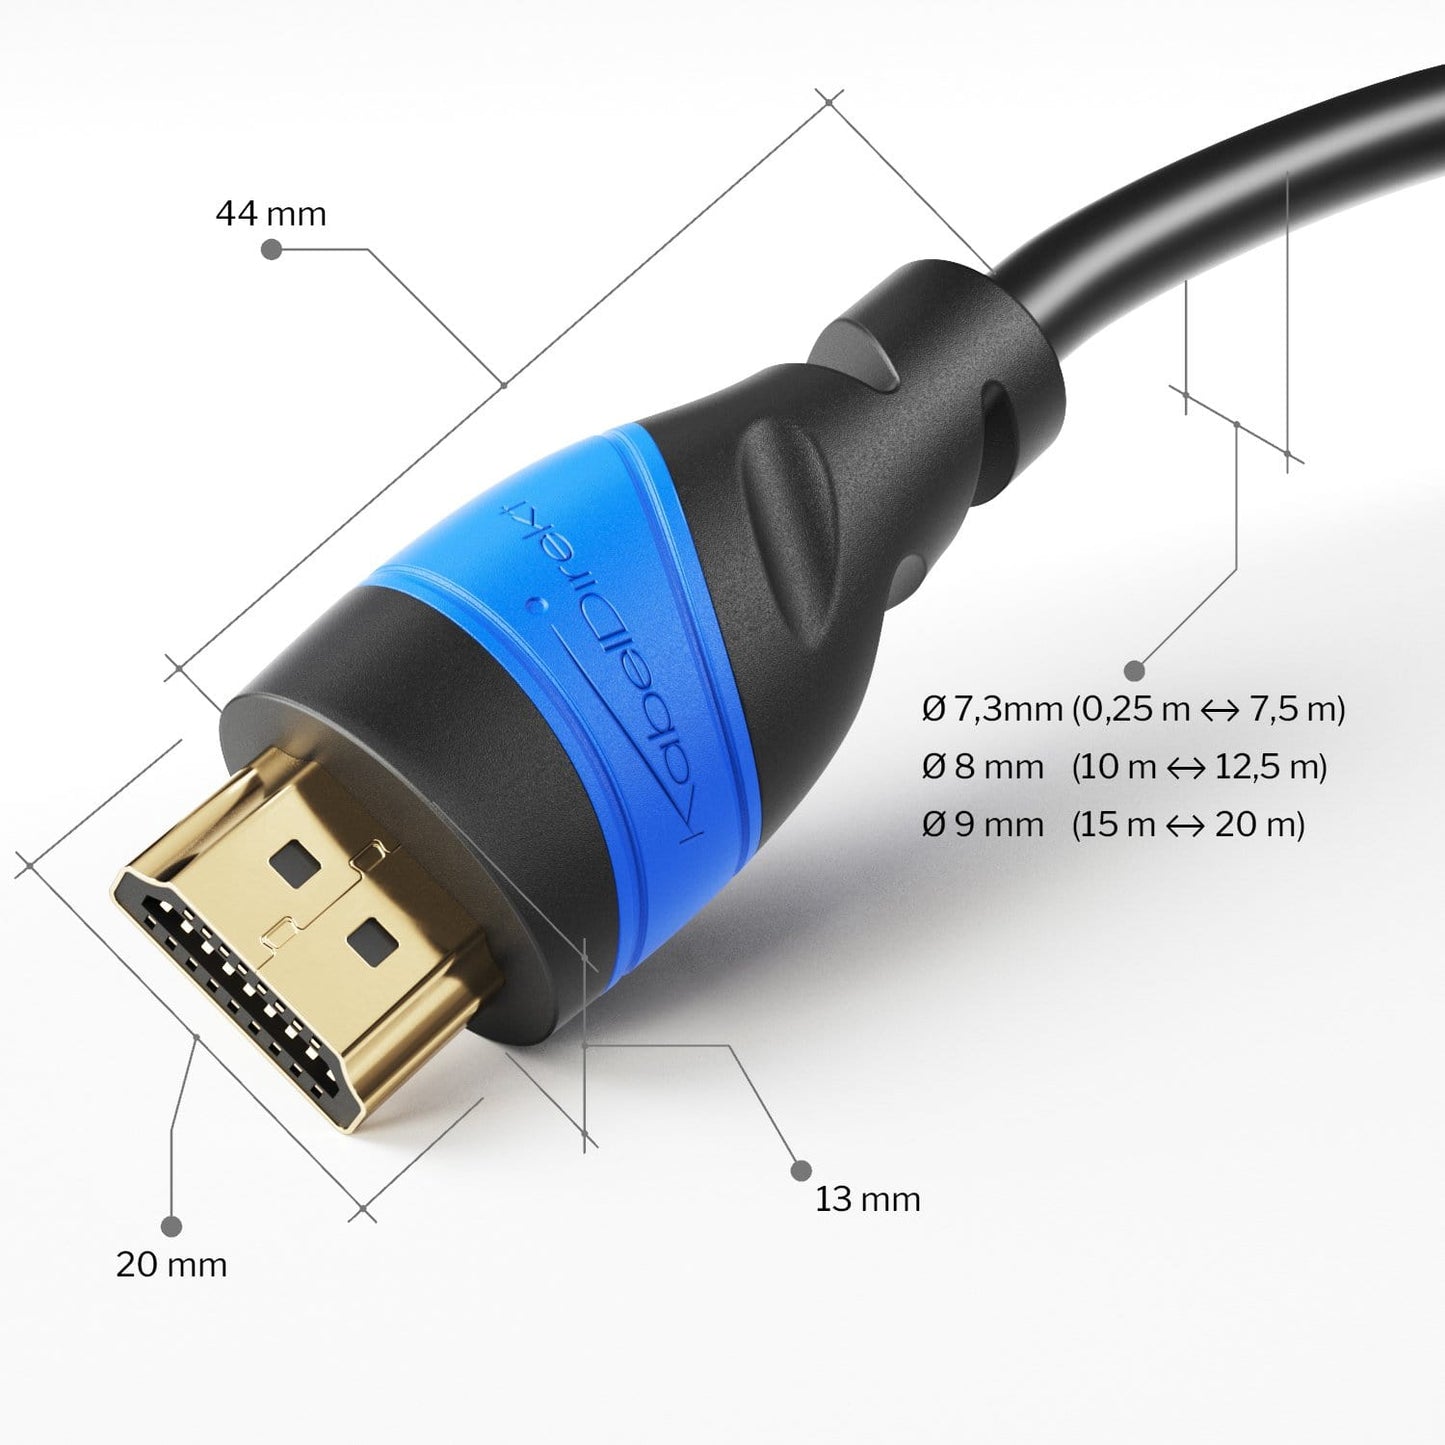 HDMI Verlängerungskabel – kompatibel mit HDMI 2.0a/b 2.0, 1.4a, 4K Ultra HD, 3D, Full HD, 1080p, HDR, ARC, Ethernet